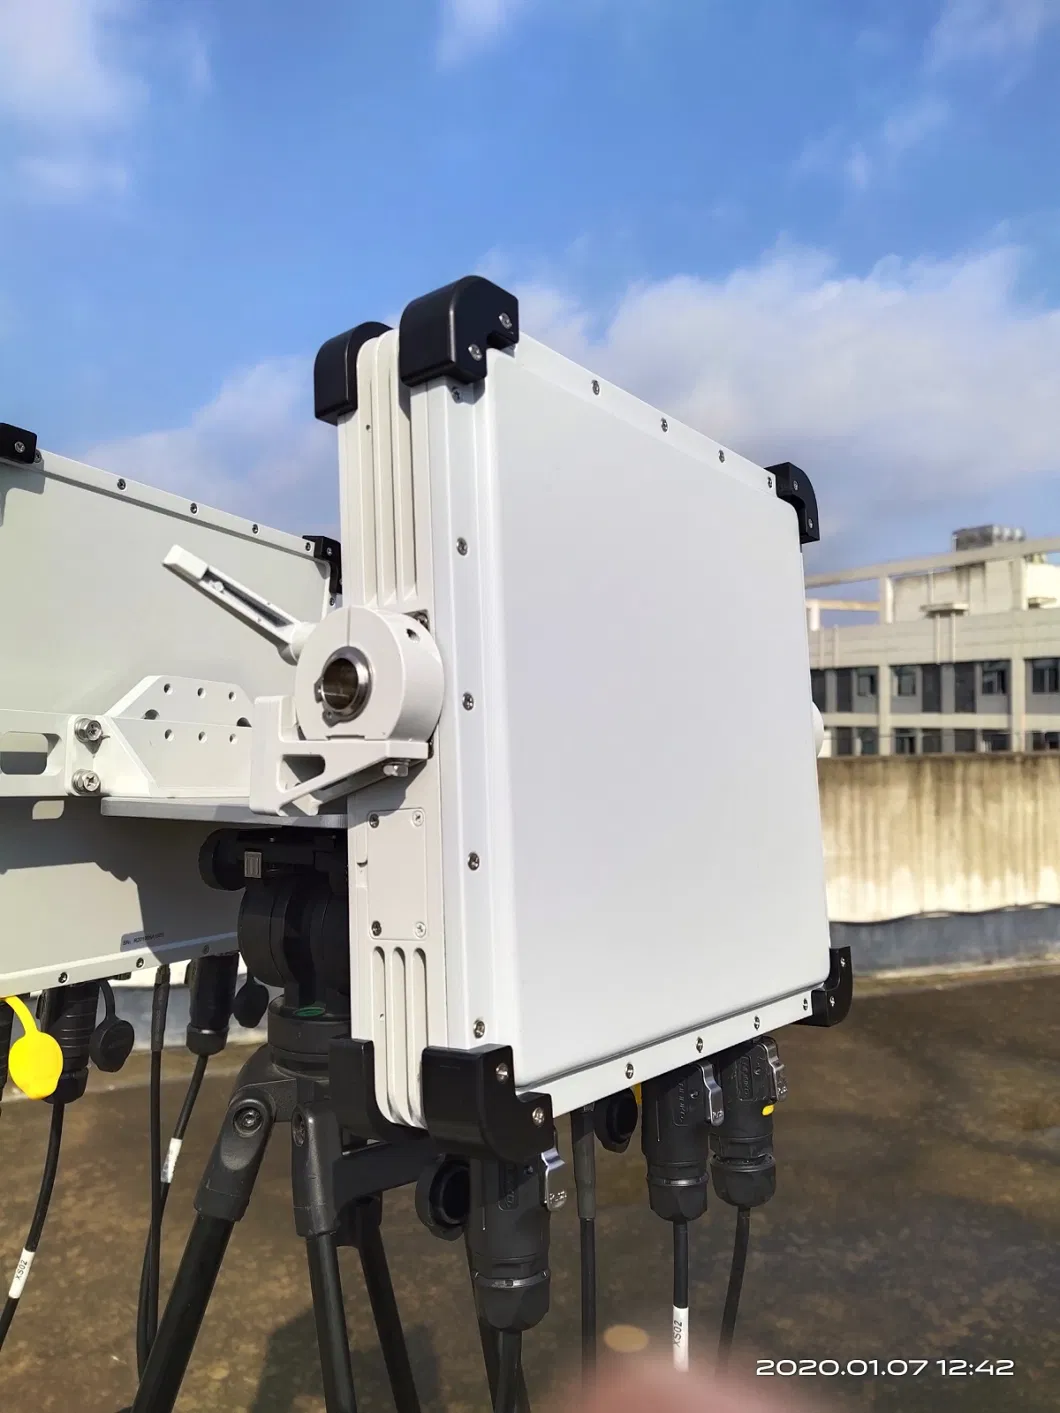 Ground Surveillance Radar for Solar Farm Perimeter Surveillance